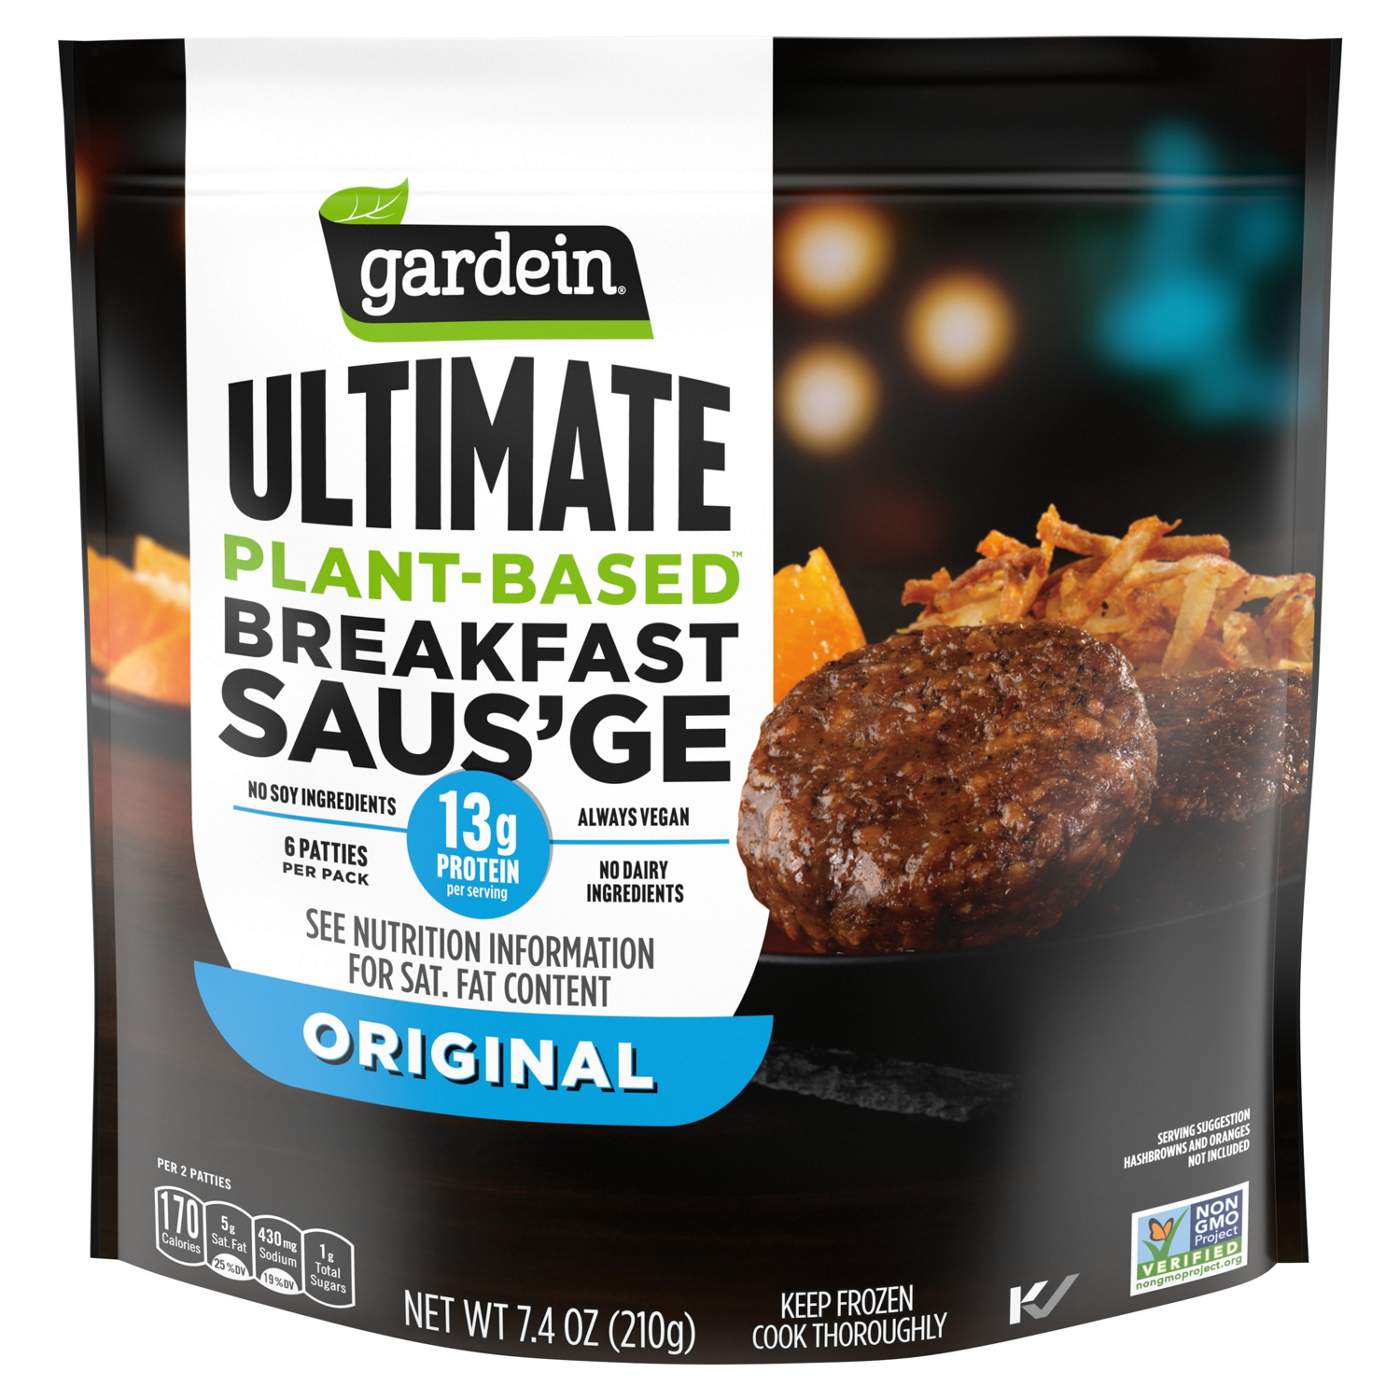 Gardein Ultimate Original Plant-Based Breakfast Saus'ge; image 1 of 4